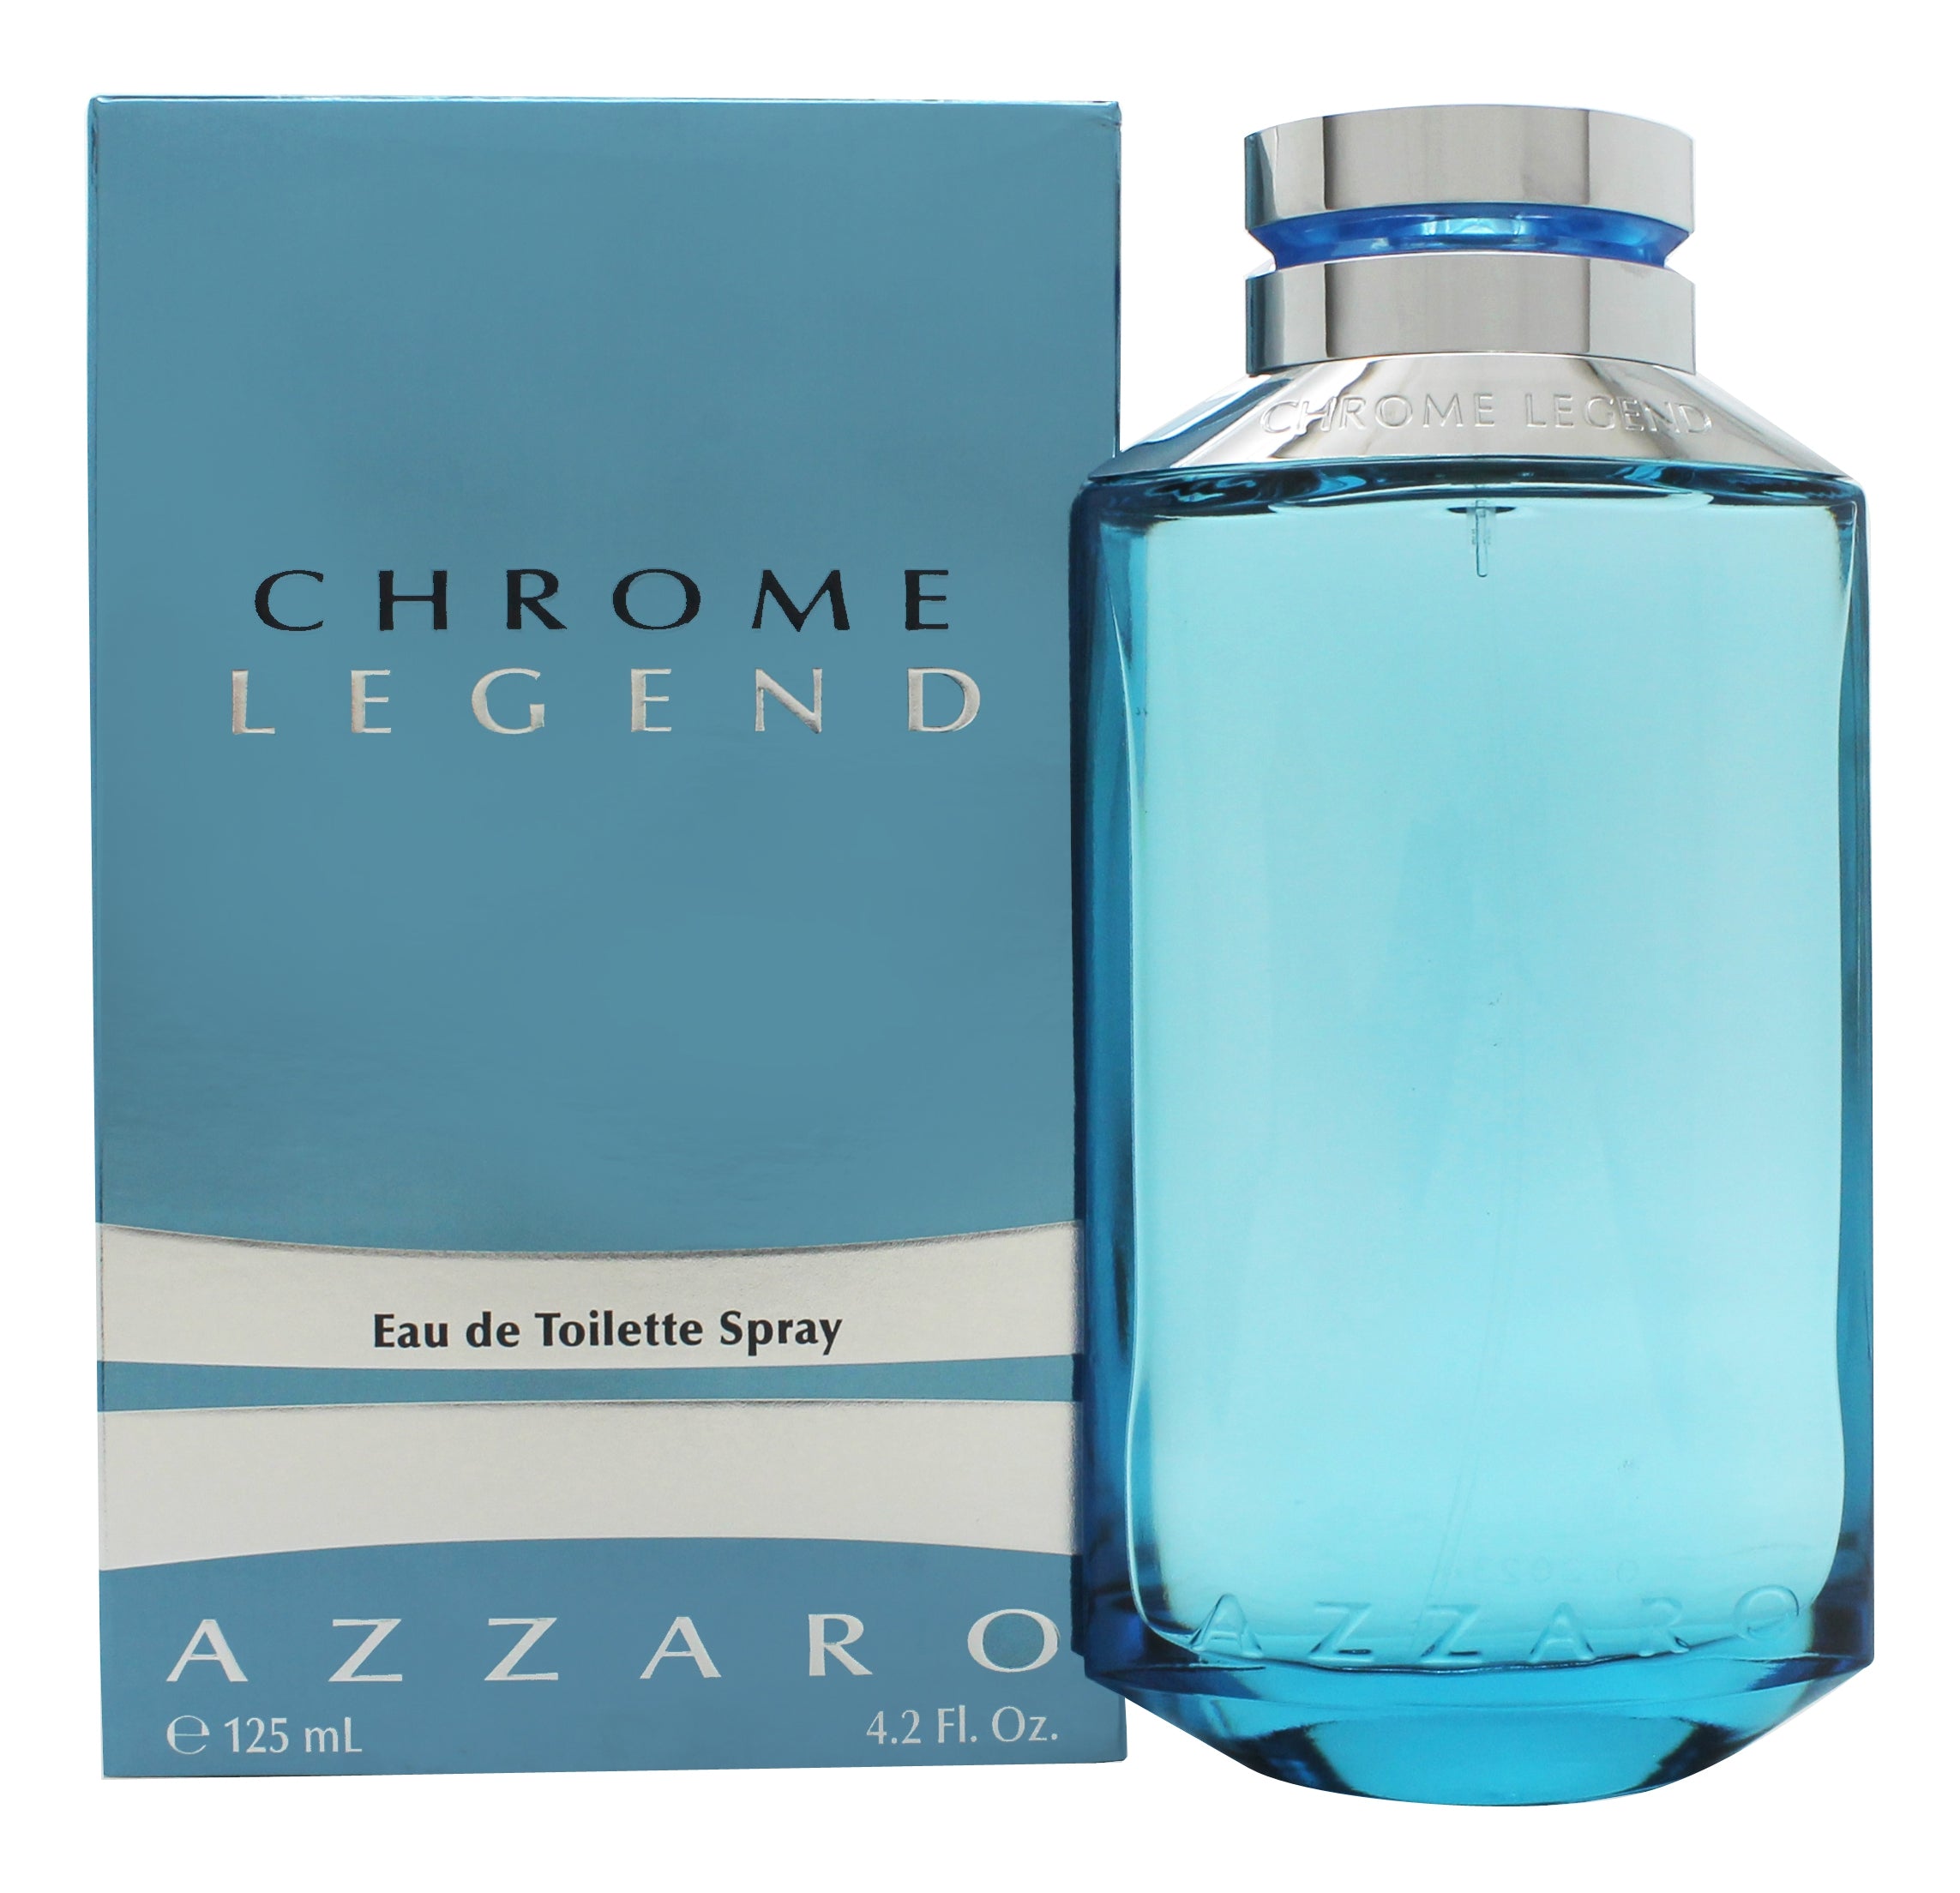 View Azzaro Chrome Legend Eau de Toilette 125ml Spray information